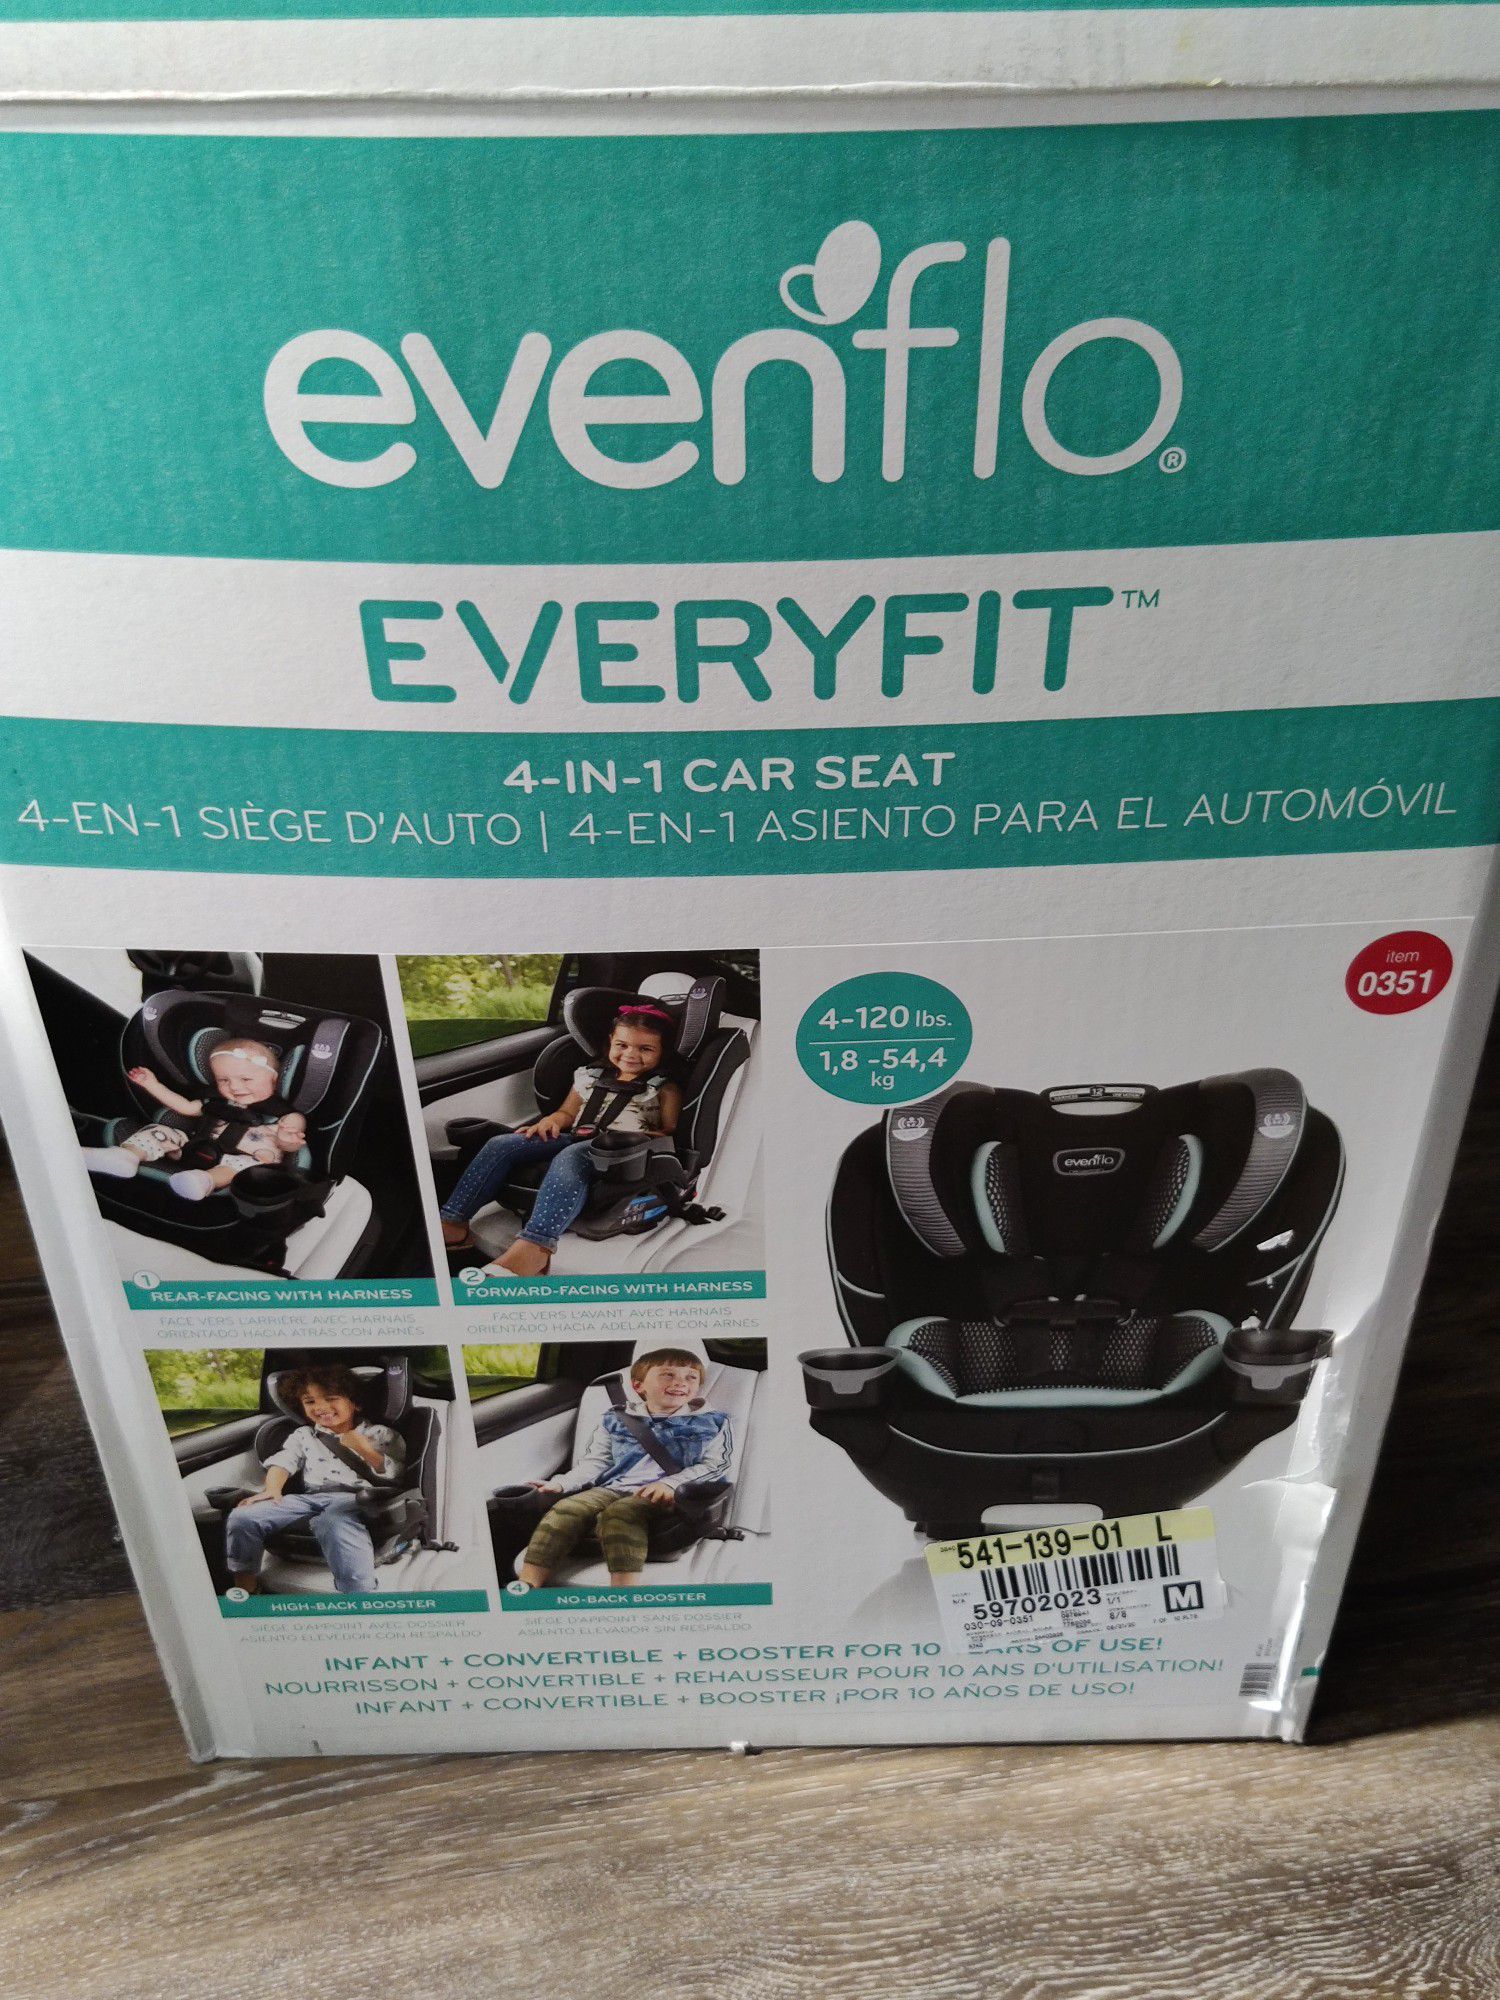 Brand new EvenFlo Everyfit car seat